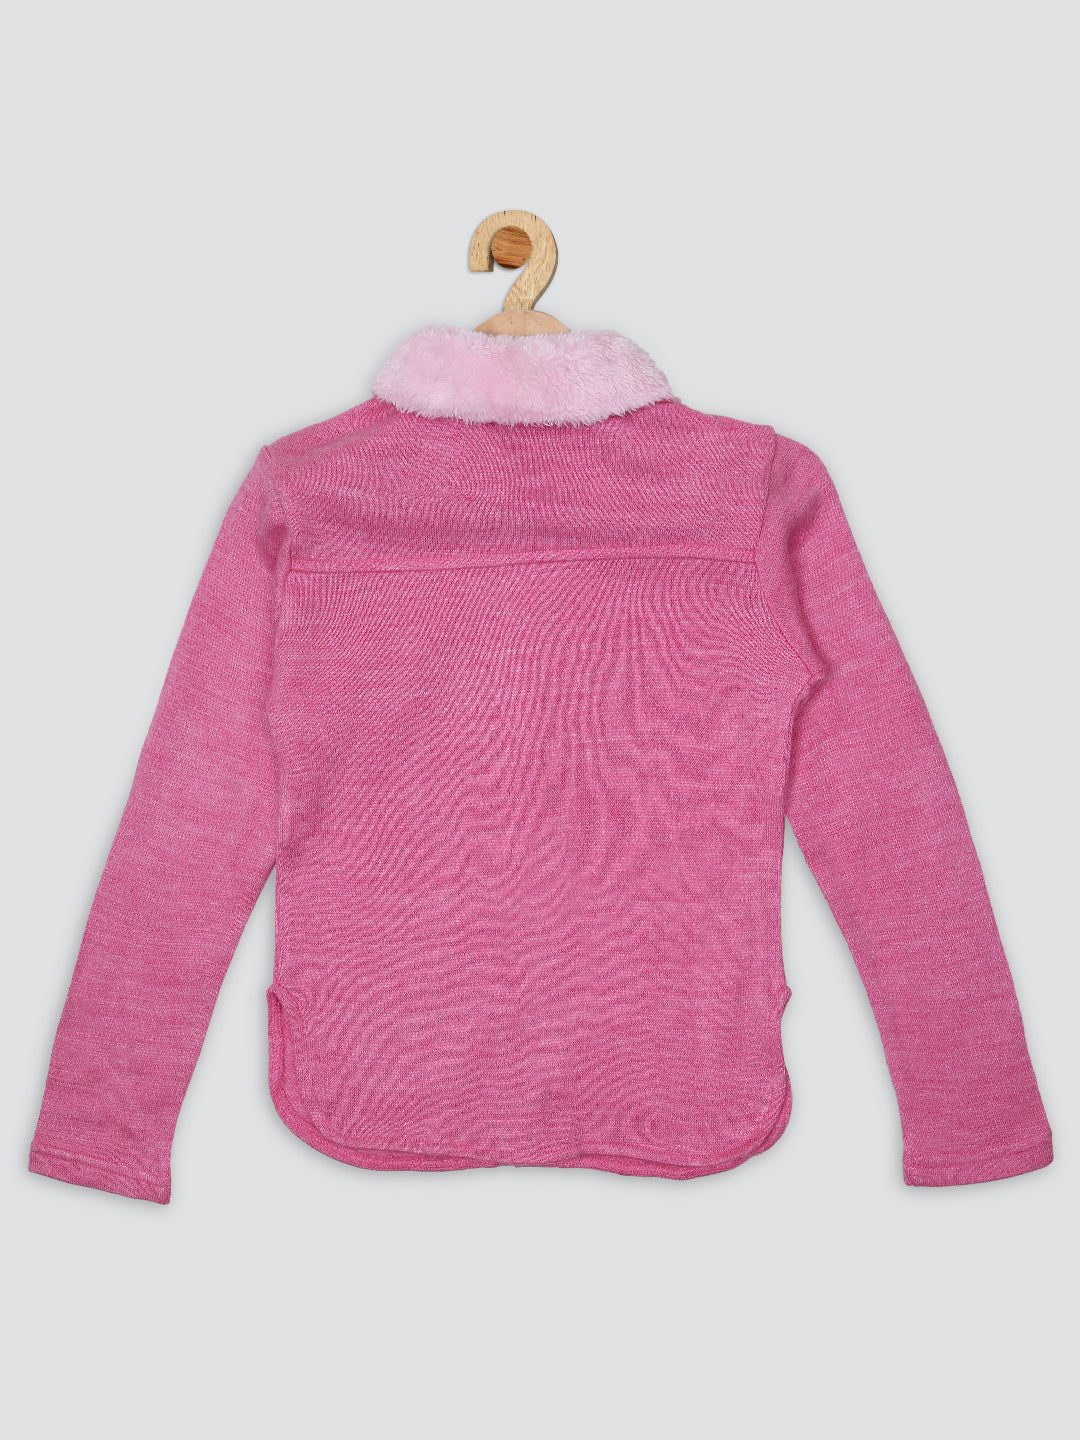 Pampolina Girls Collar Solid Walloon Top-Pink